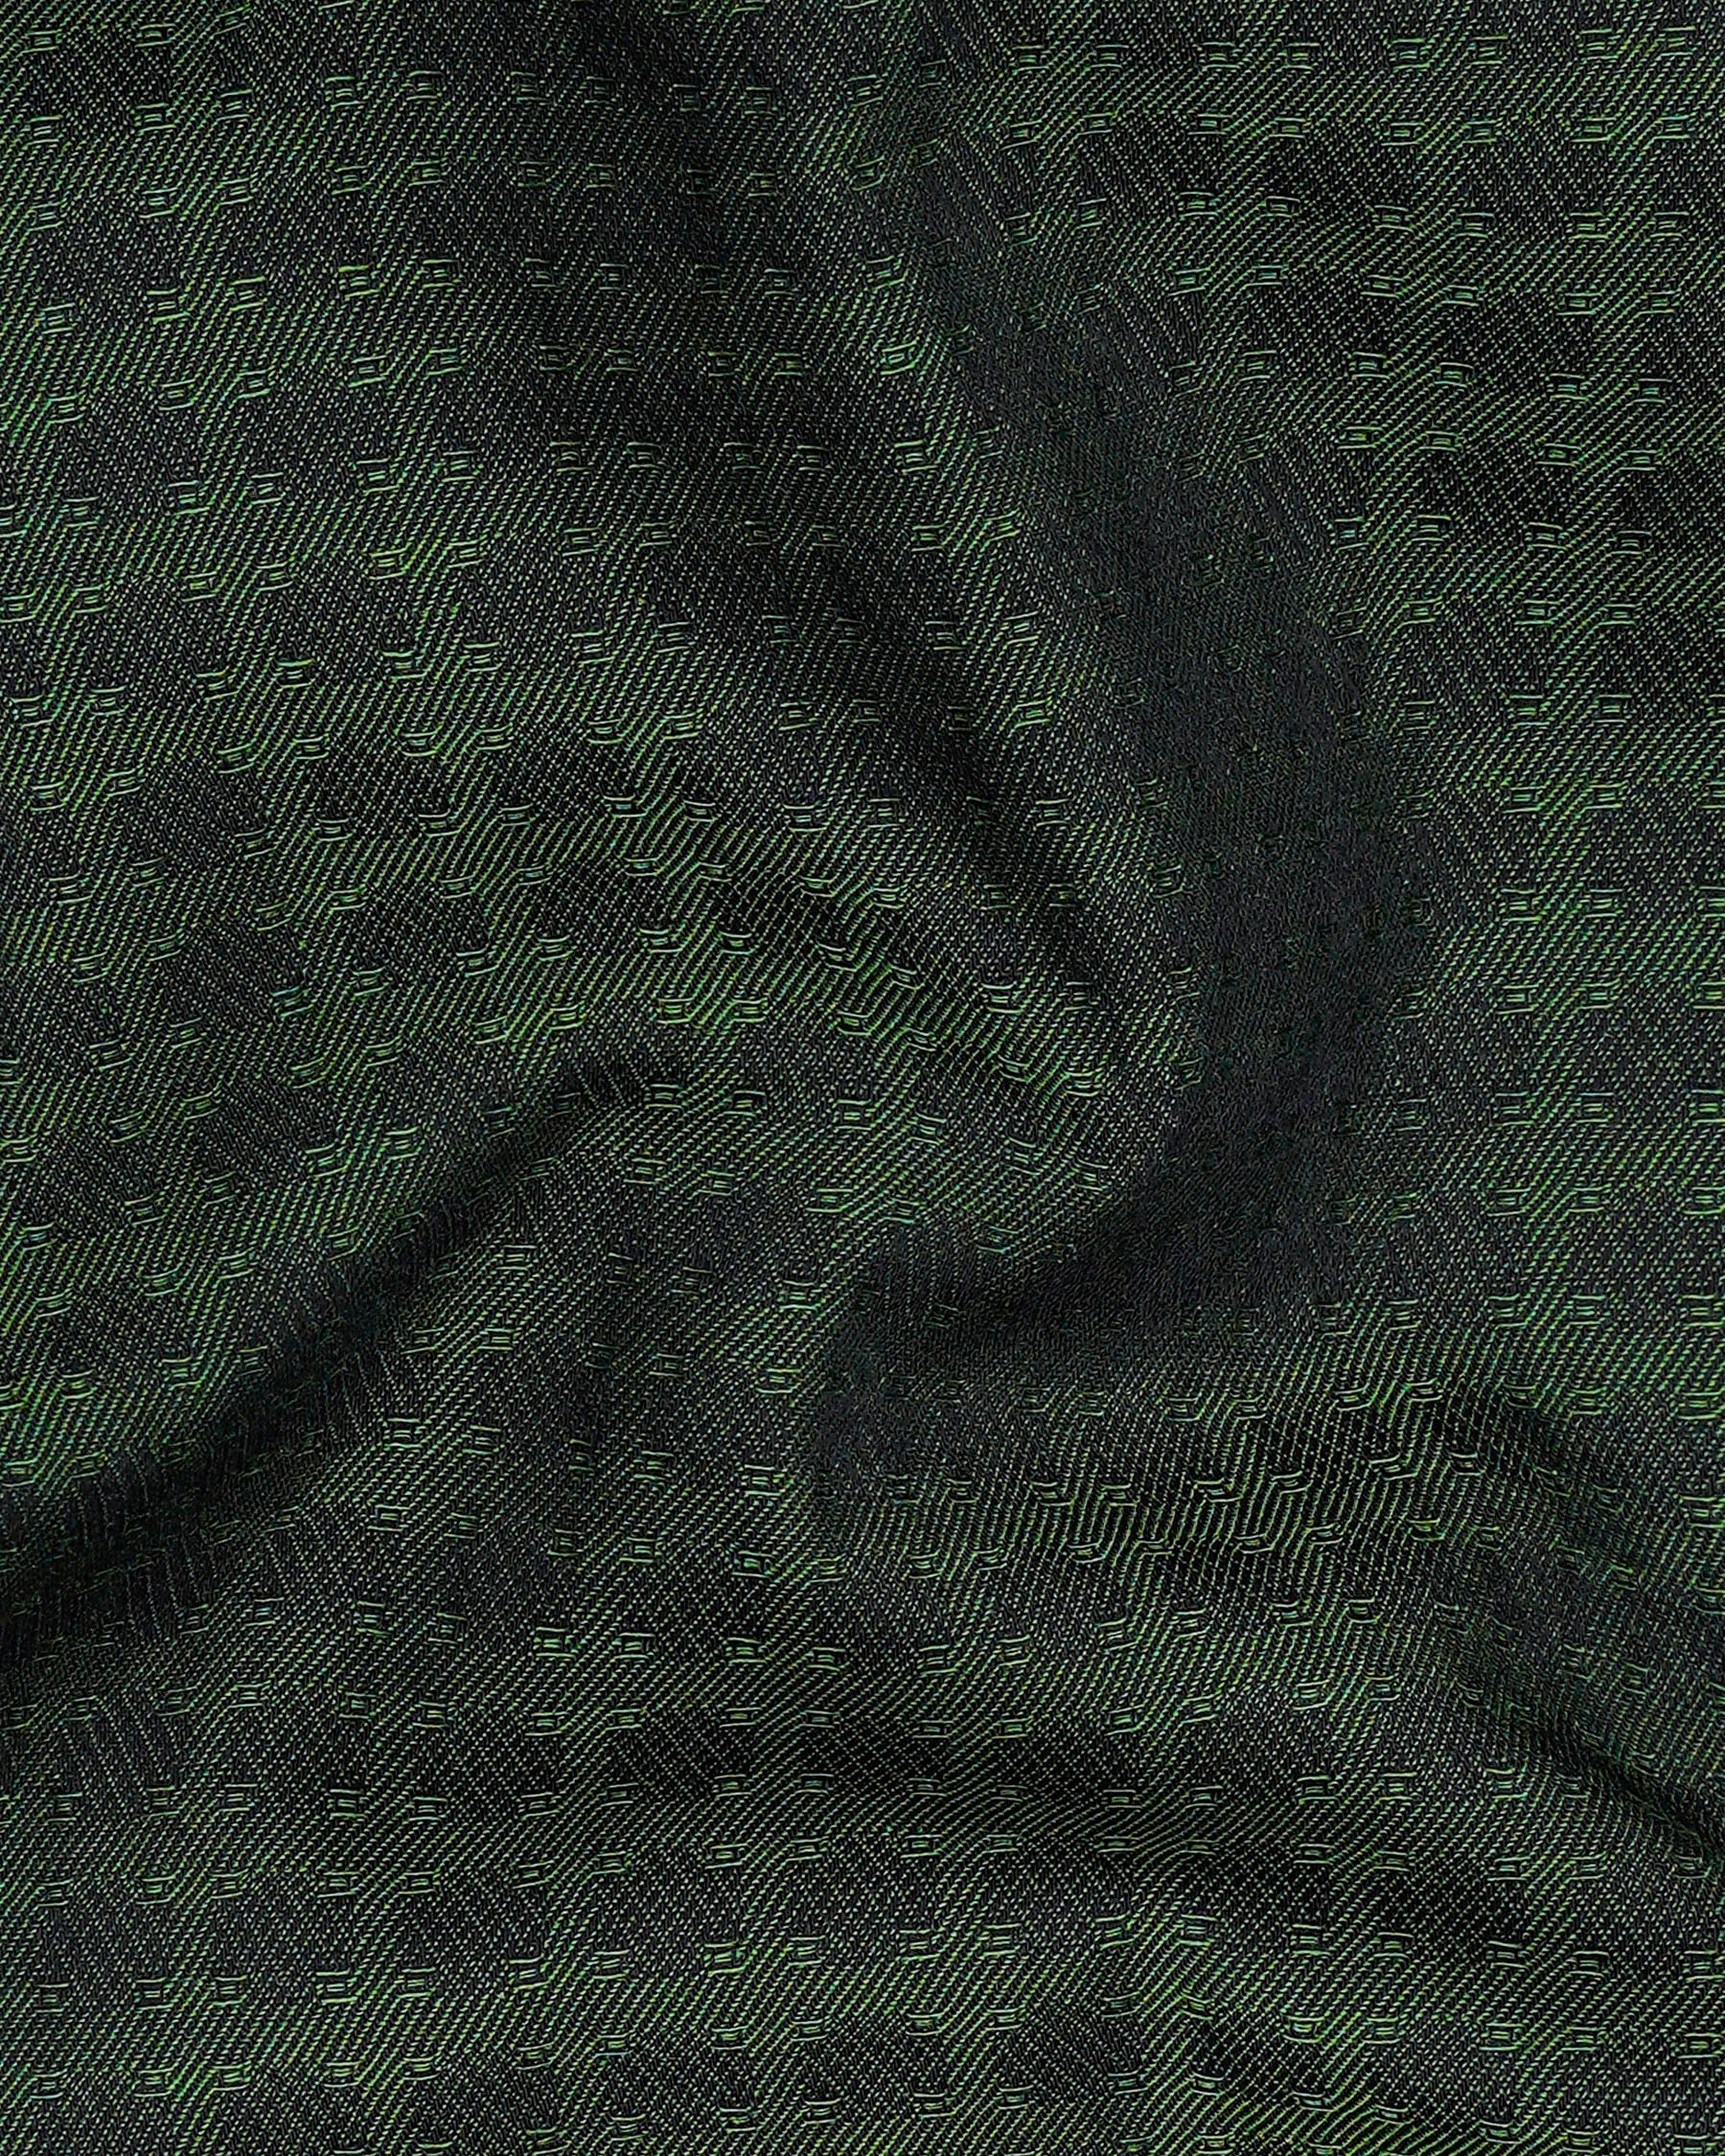 Axolotl Green and Jade Black Dobby Textured Premium Giza Cotton Shirt 7906-BLK -38,7906-BLK -H-38,7906-BLK -39,7906-BLK -H-39,7906-BLK -40,7906-BLK -H-40,7906-BLK -42,7906-BLK -H-42,7906-BLK -44,7906-BLK -H-44,7906-BLK -46,7906-BLK -H-46,7906-BLK -48,7906-BLK -H-48,7906-BLK -50,7906-BLK -H-50,7906-BLK -52,7906-BLK -H-52